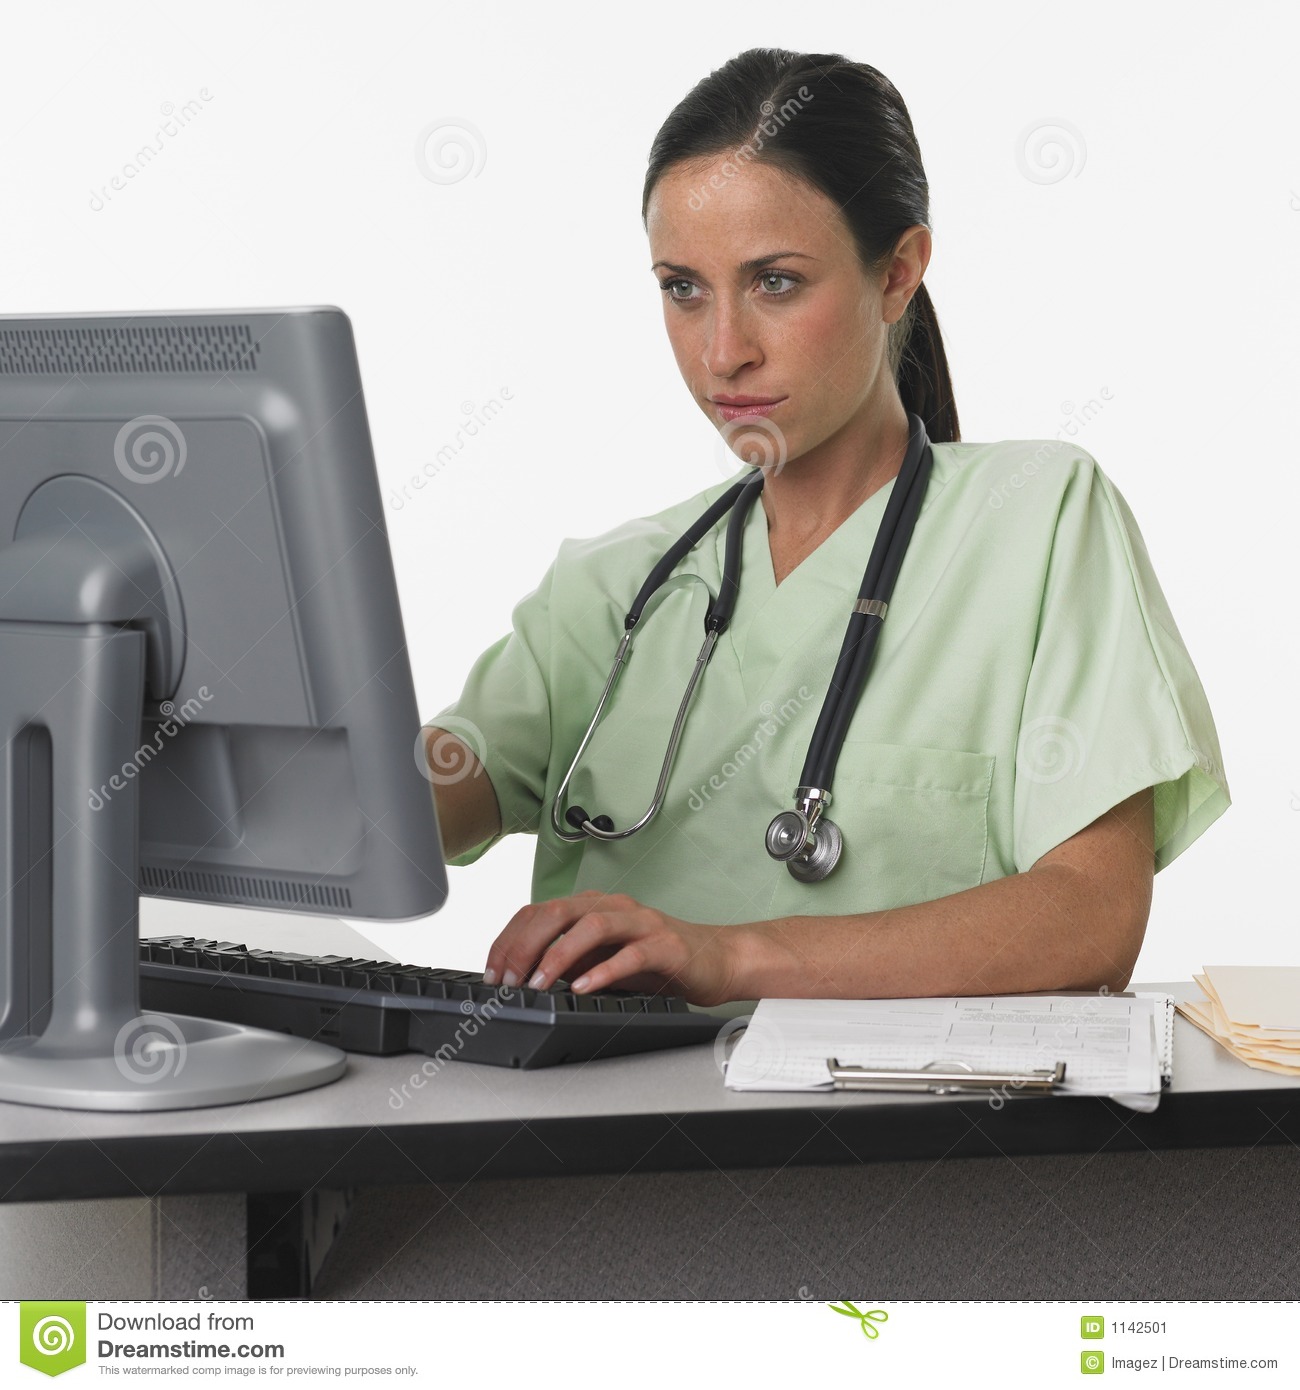 Nurse Computer Stock Image   Image  1142501